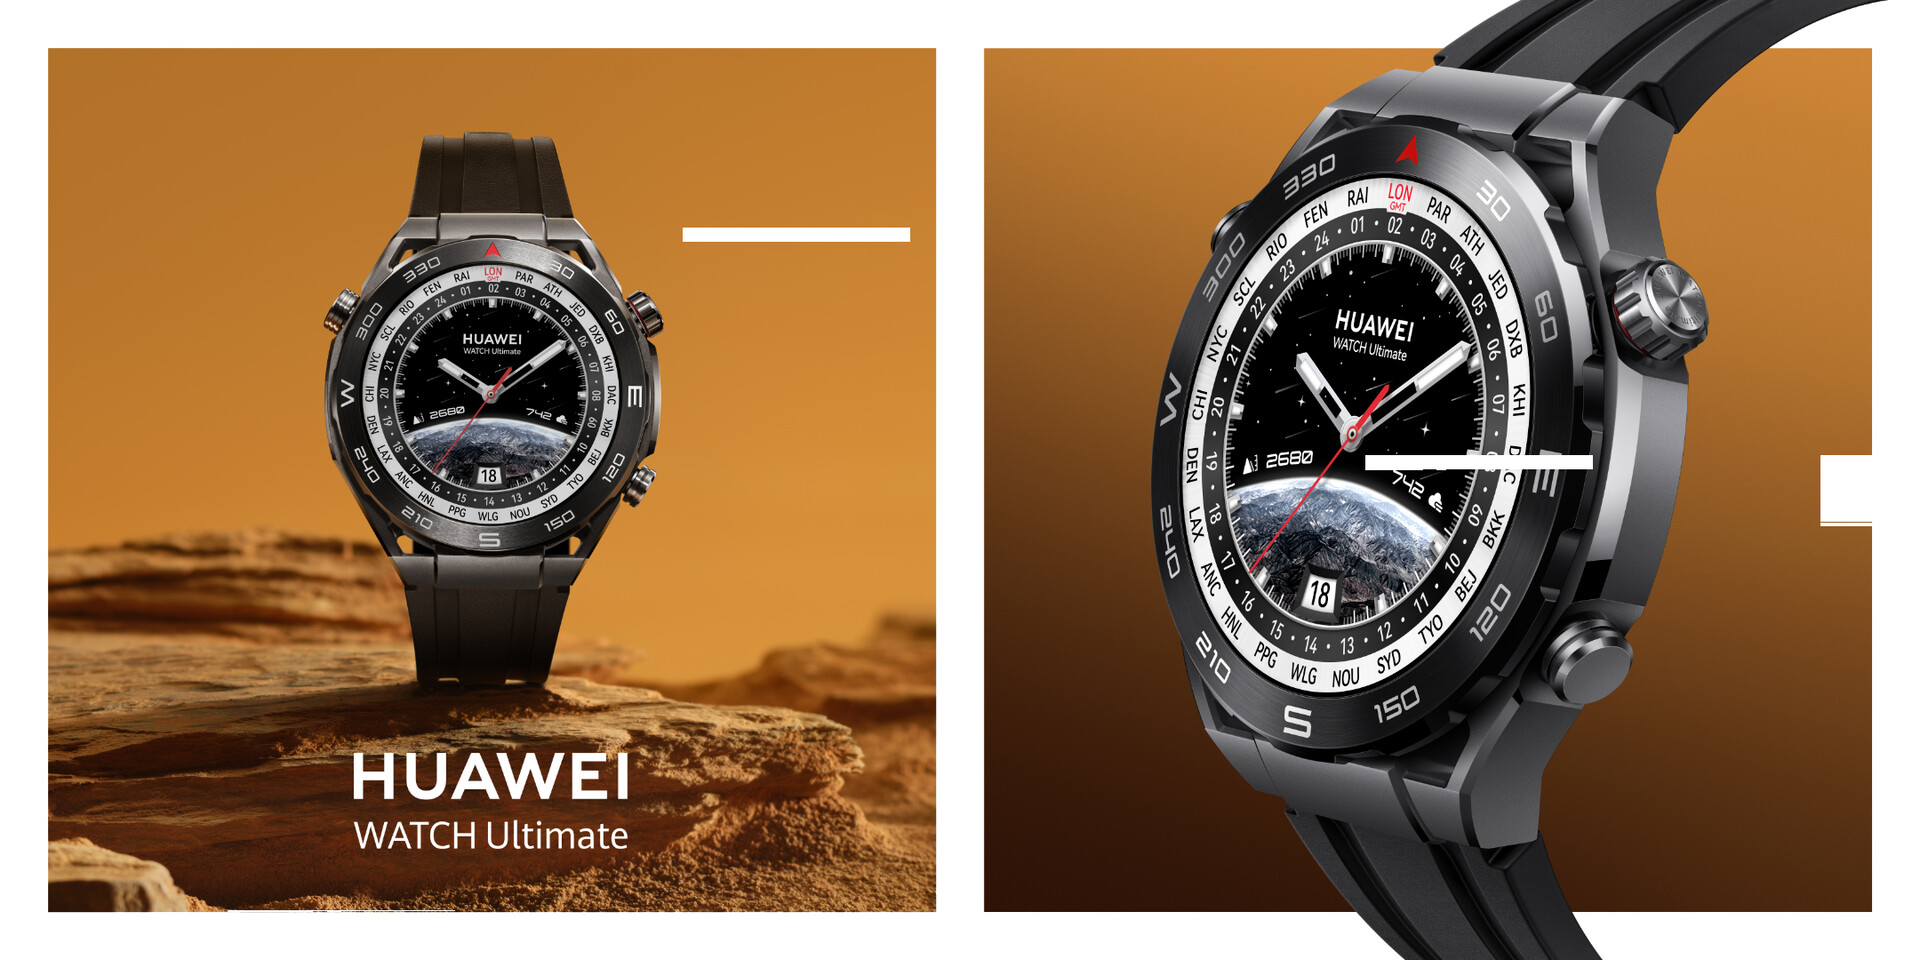 Huawei Watch Ultimate debutó en Europa sin conexión por satélite, pero con regalo